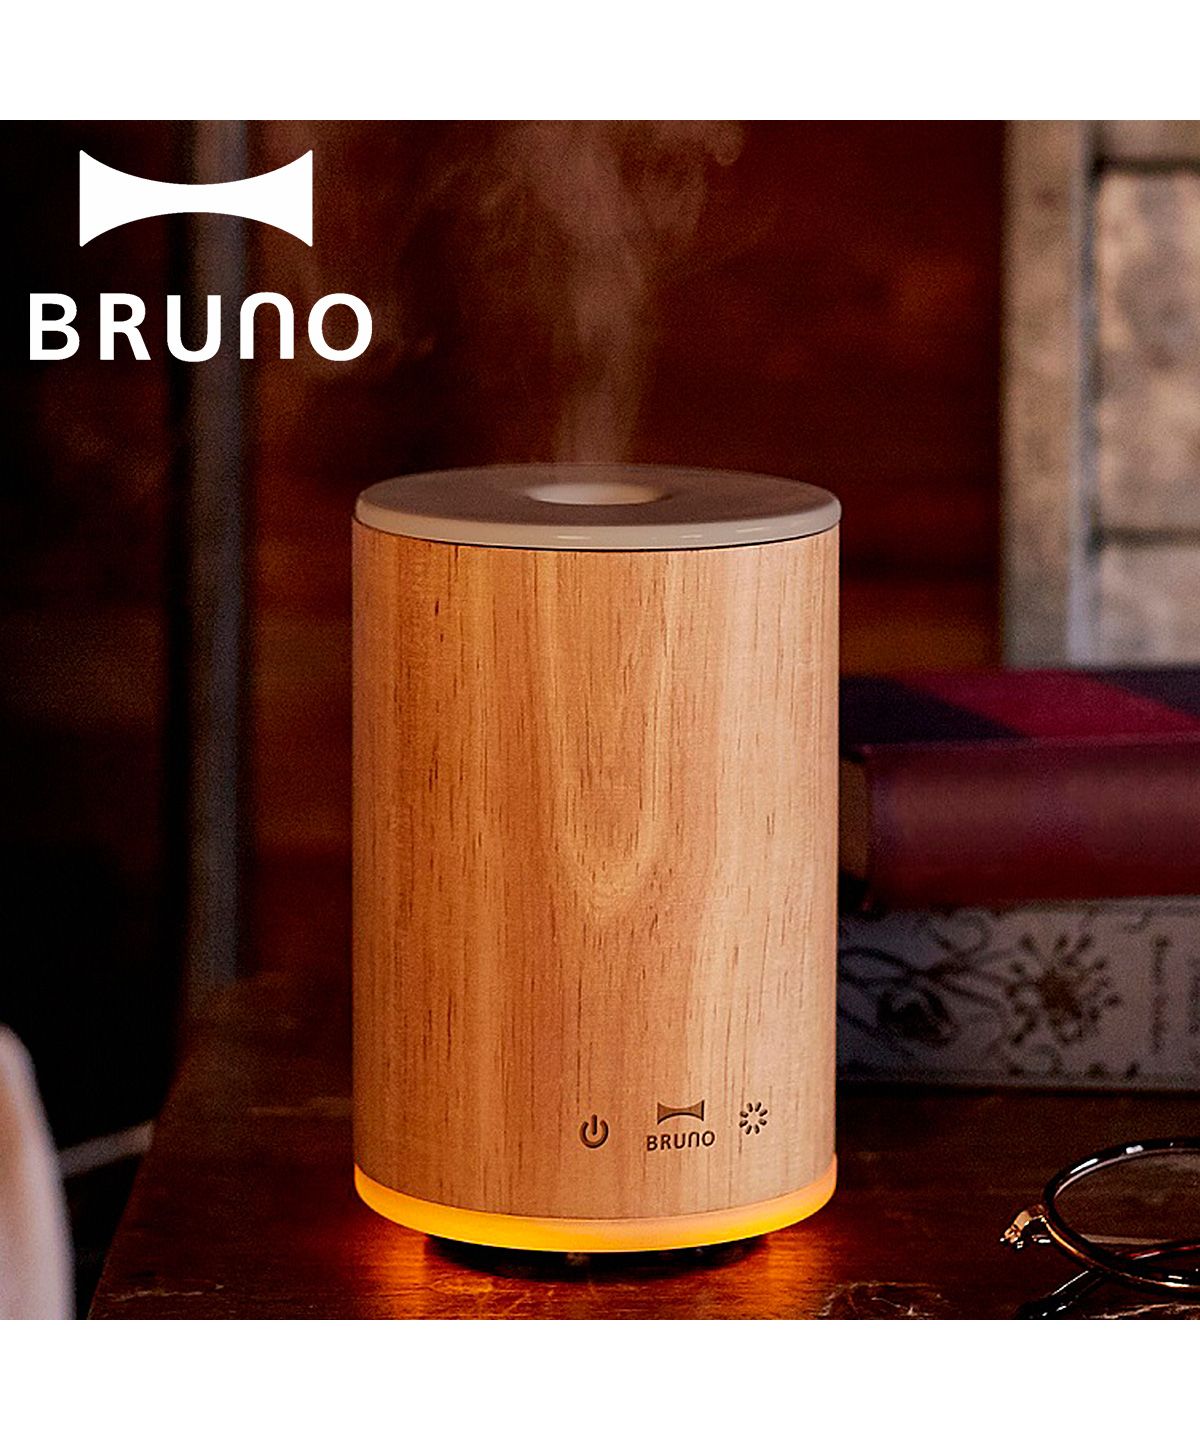 BRUNO ブルーノ 加湿器 超音波式 アロマオイル ディフューザー ウッドアロマミスト 一人暮らし リビング 寝室 小型 コンパクト 家電  ナチュラルウッド (503637687) | ブルーノ(BRUNO) - d fashion